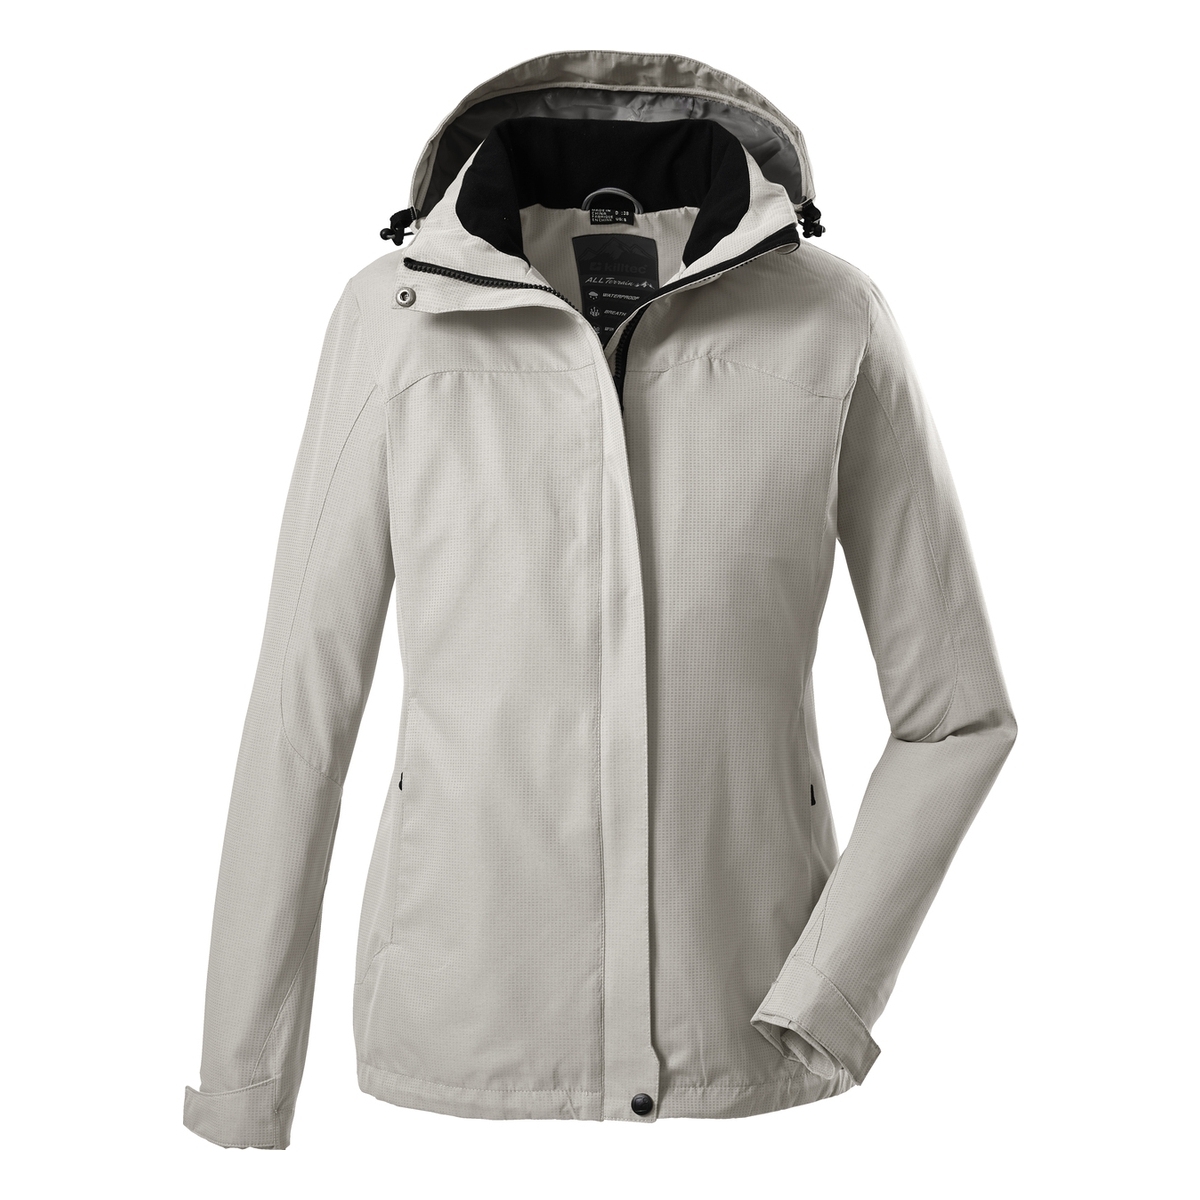 Rain Jacket With Zip-off Hood Outdoor Jacket killtec Womens Inkele Kg Functional Jacket